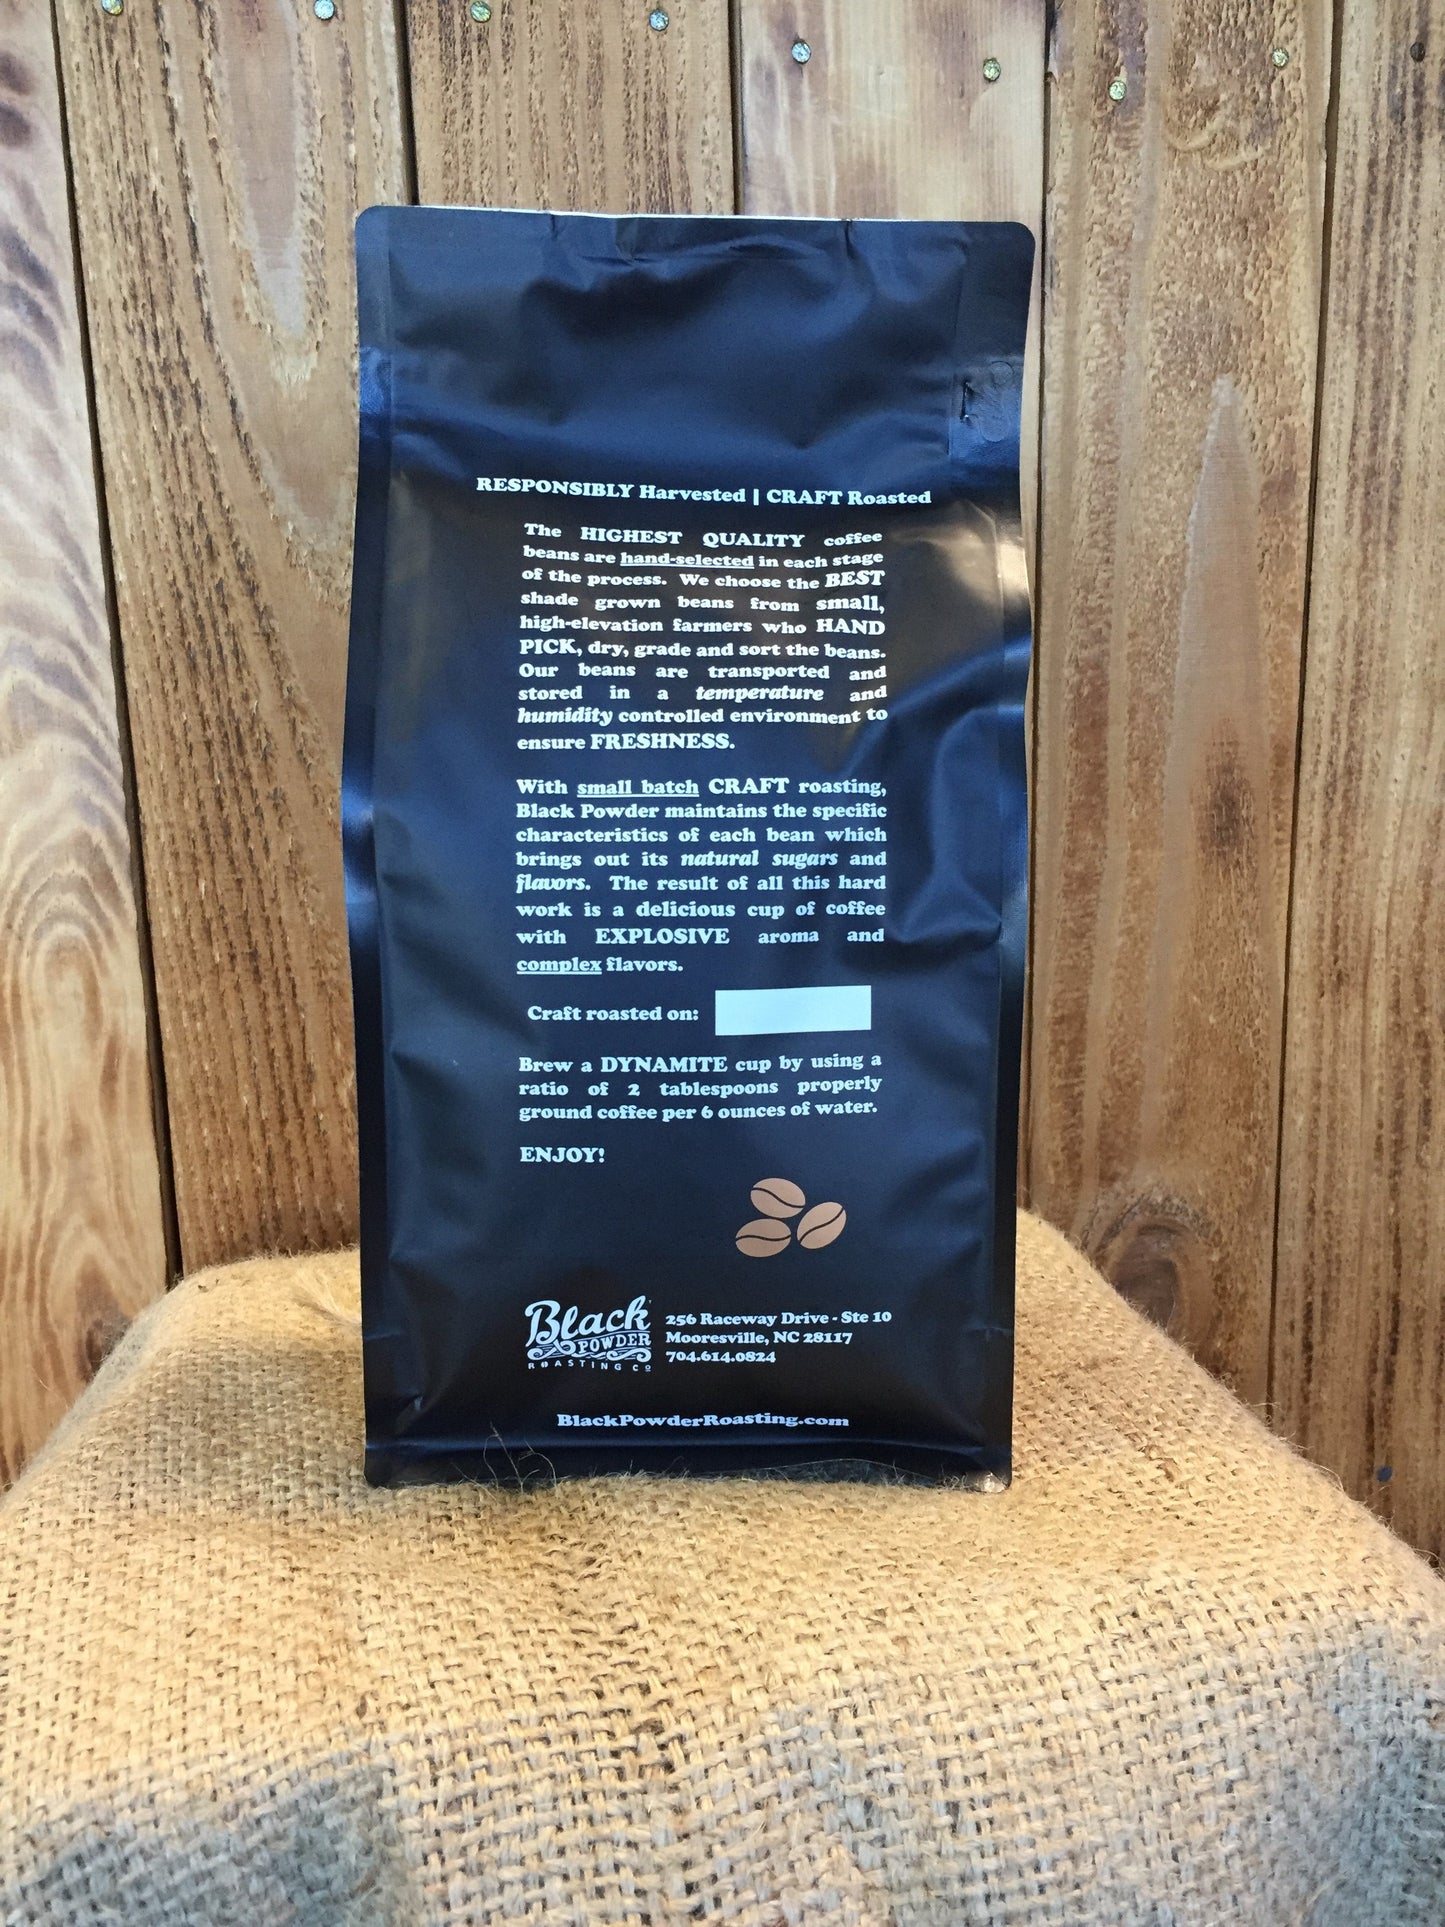 Sumatra Decaf | Naturally Grown | Swiss Water Process | Dark Roast by Black Powder Coffee